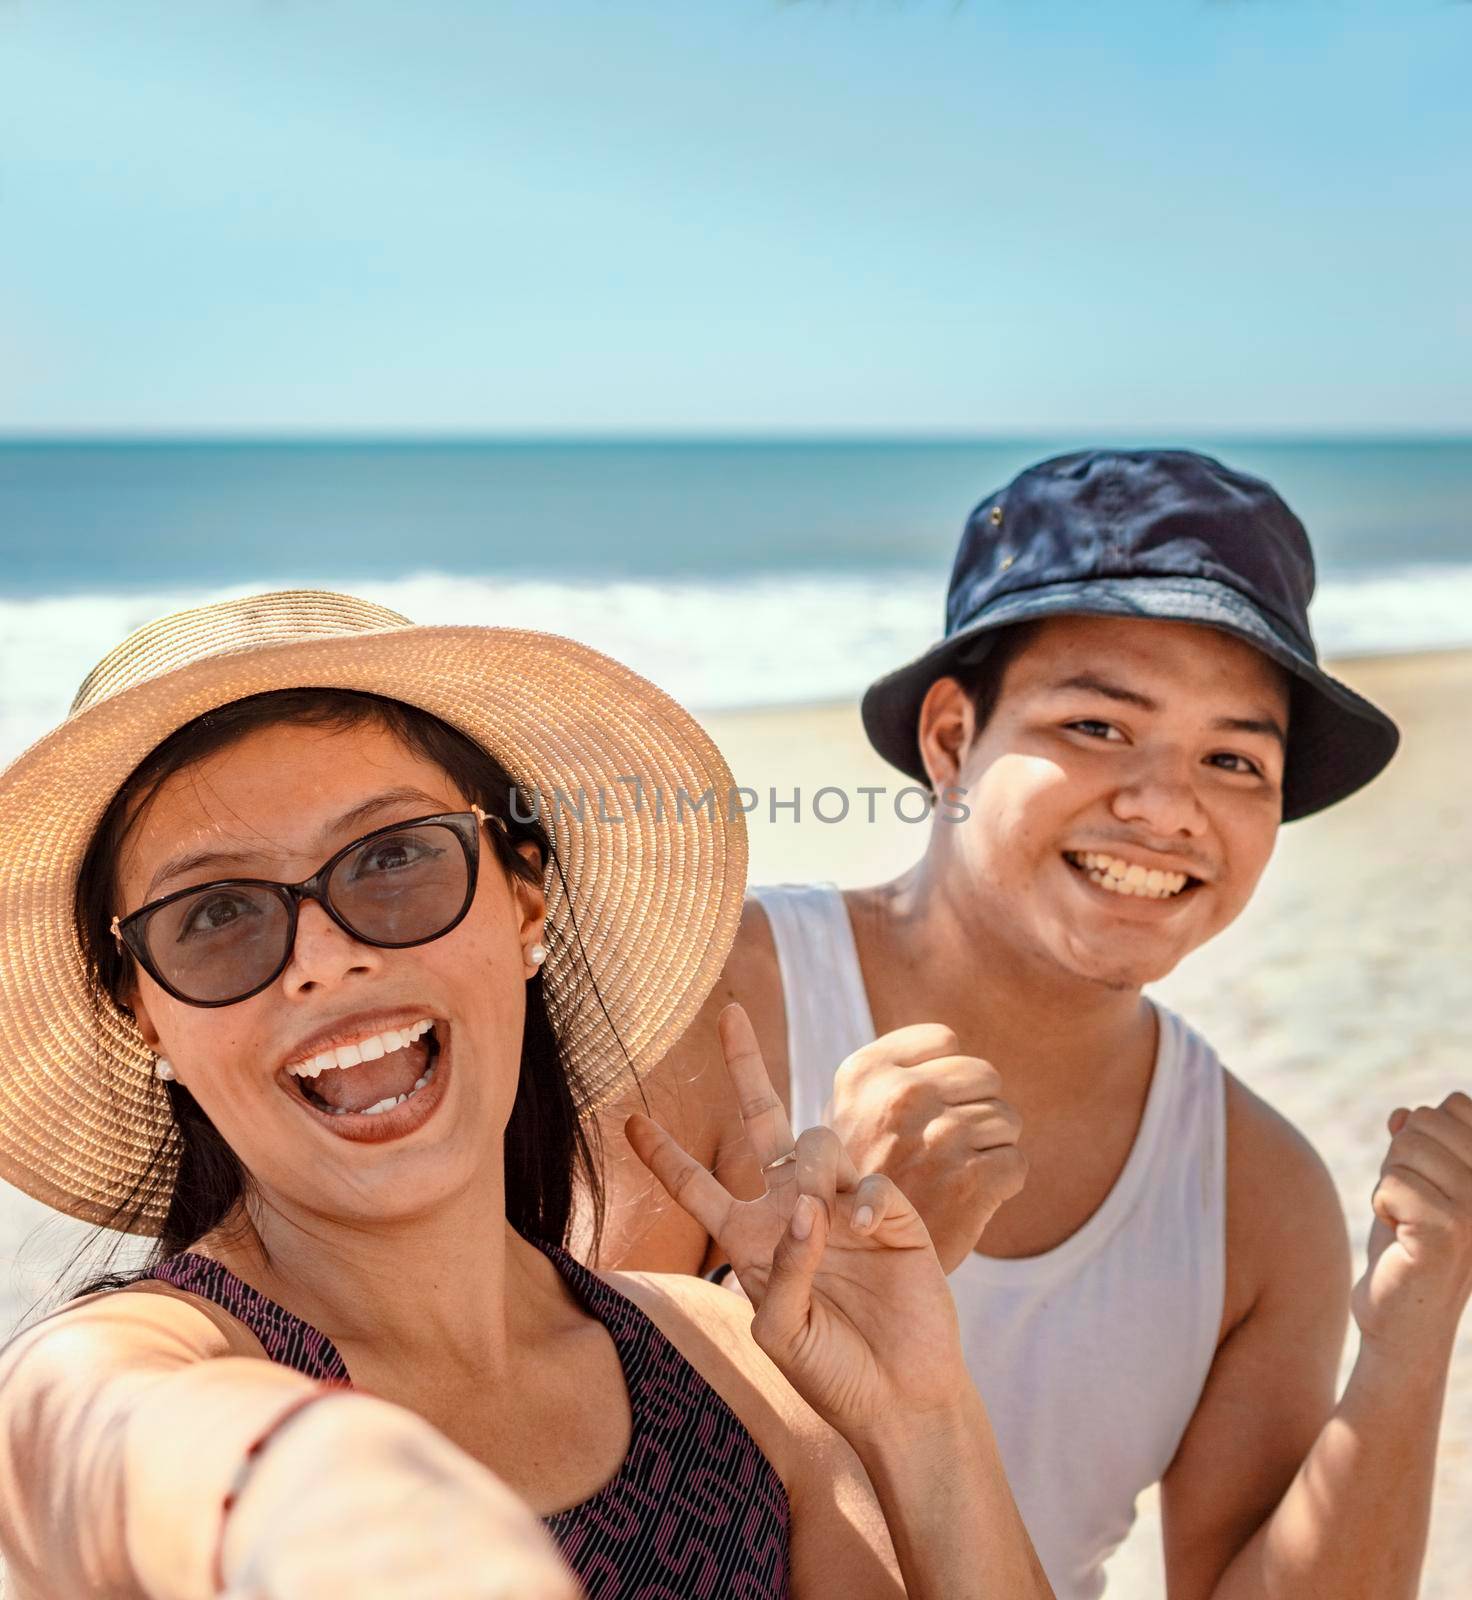 Two happy friends taking a selfie on the beach, Selfie of two happy friends on the beach by isaiphoto